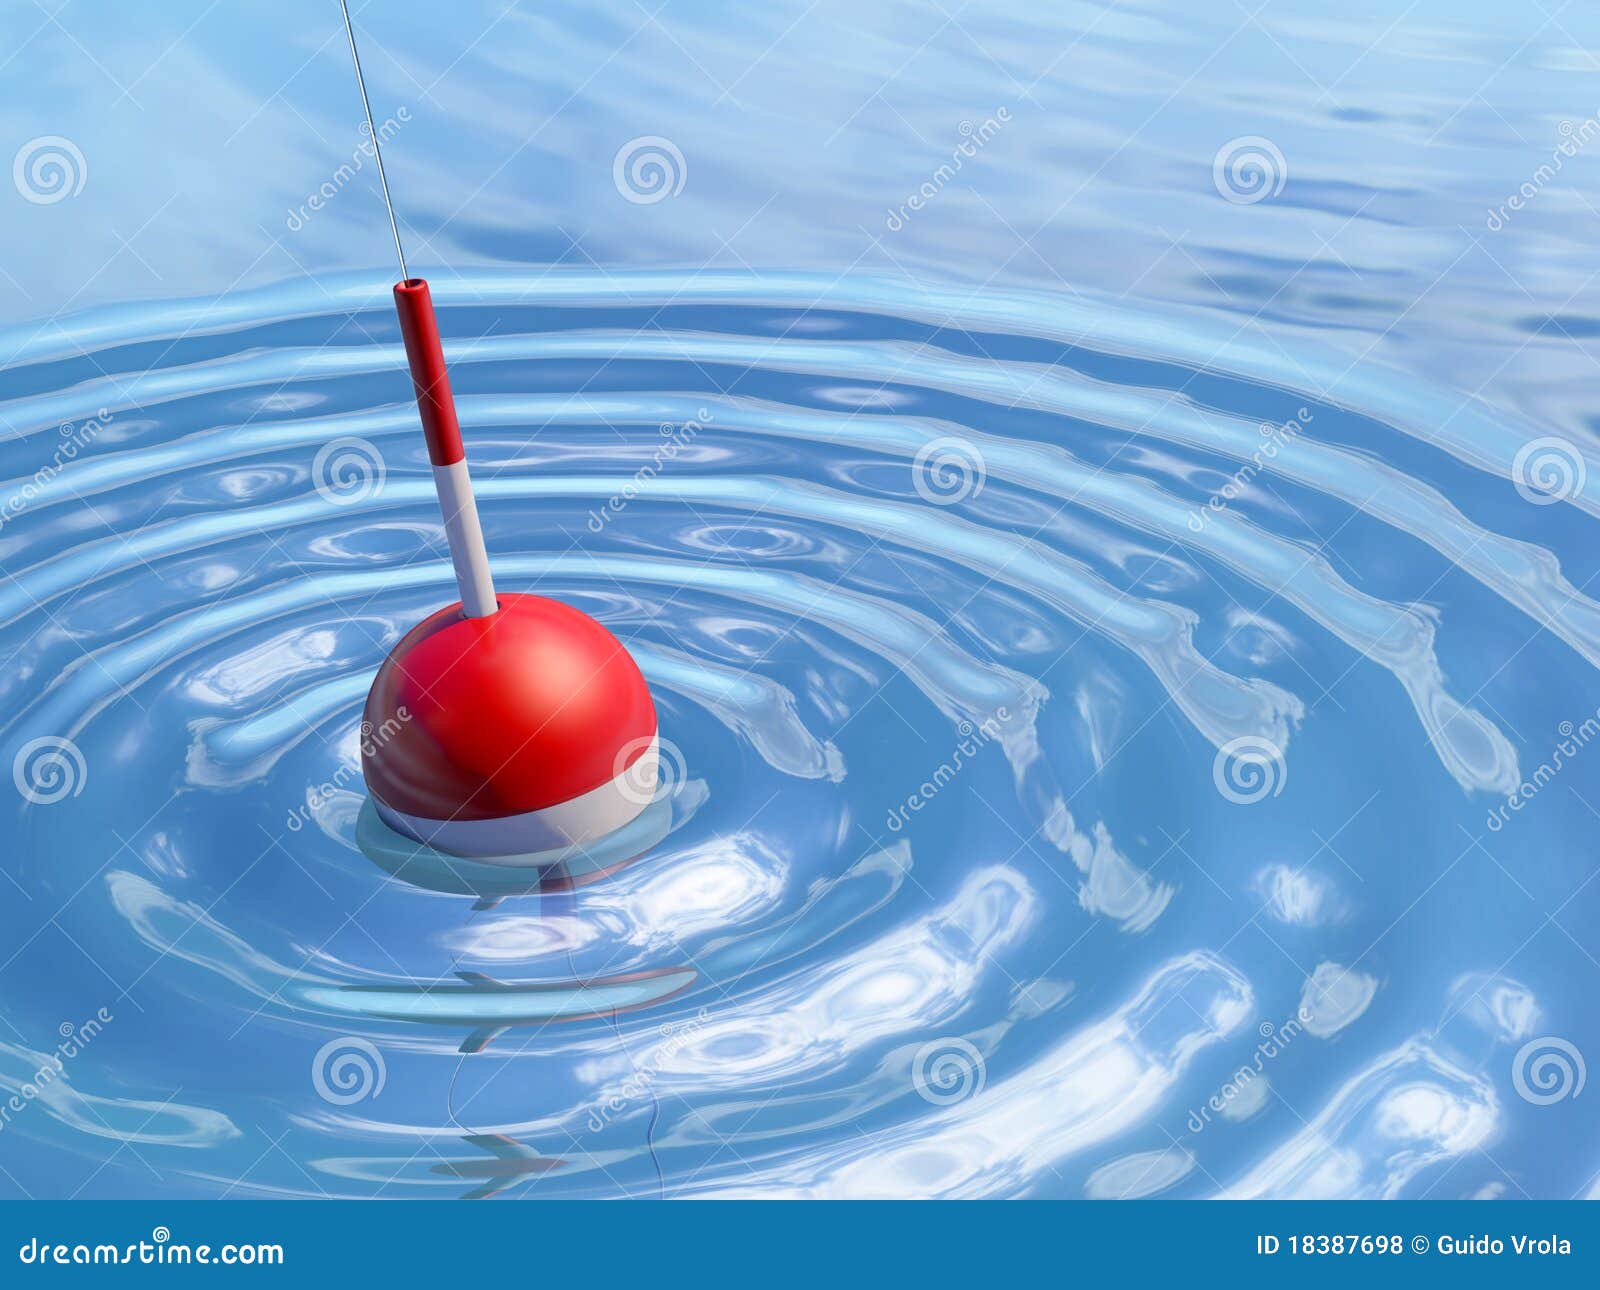 Float in the water stock illustration. Illustration of bobber